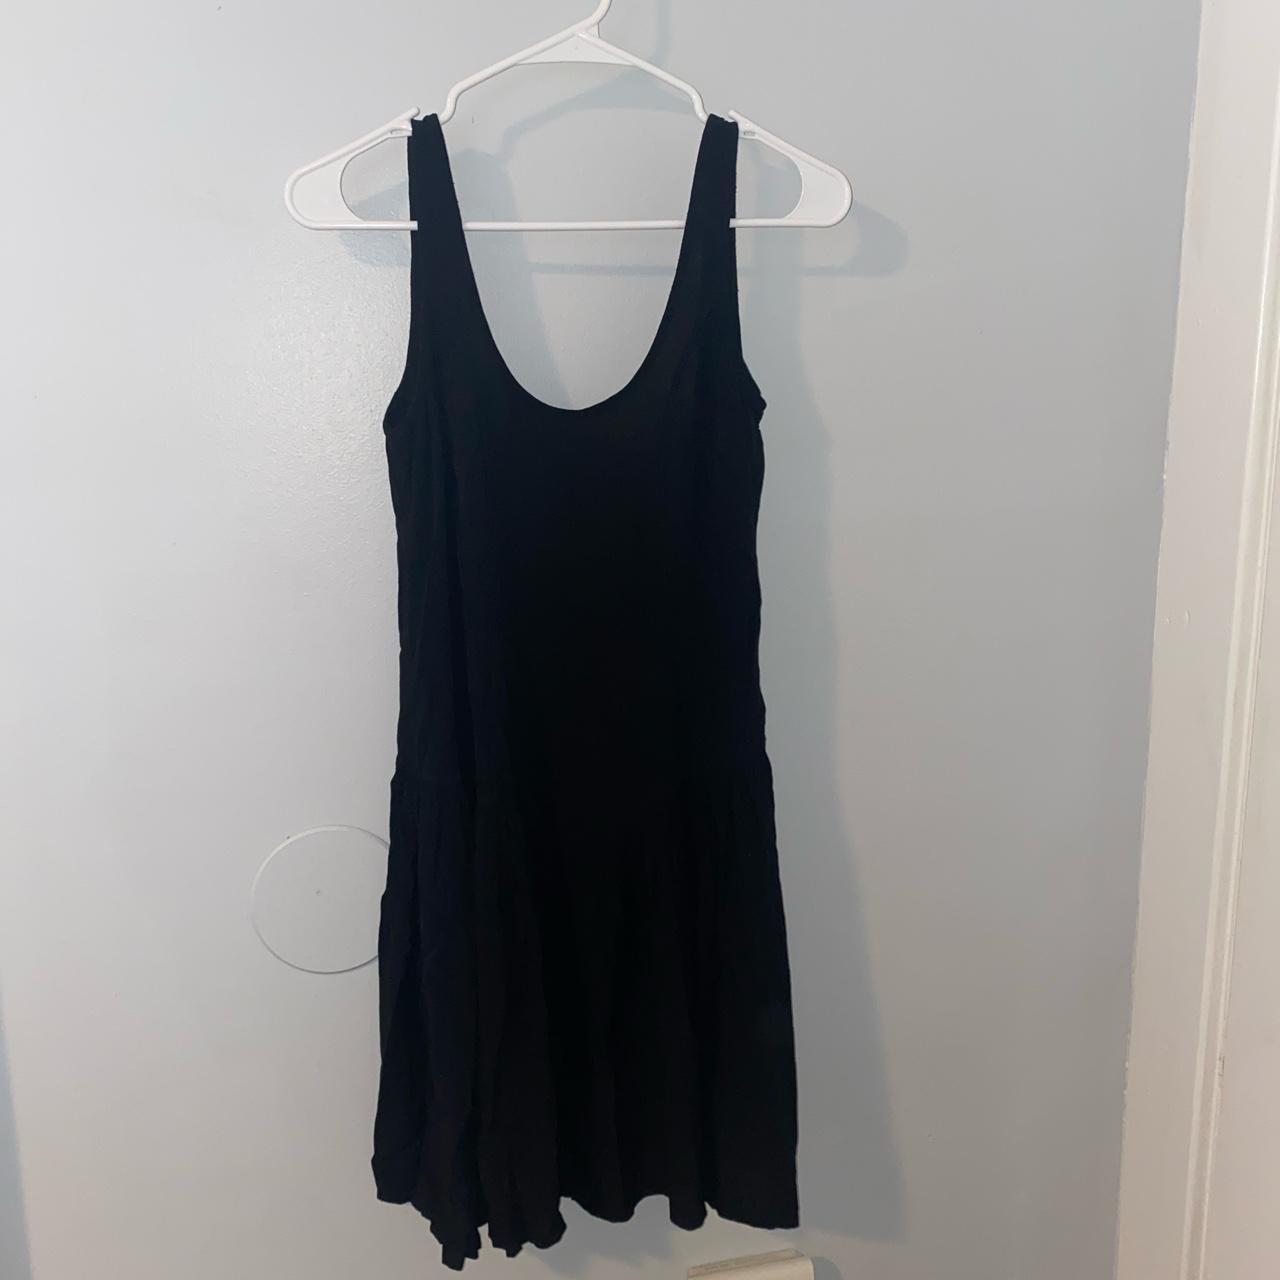 Brandy melville black dress 🖤 - never worn before w... - Depop